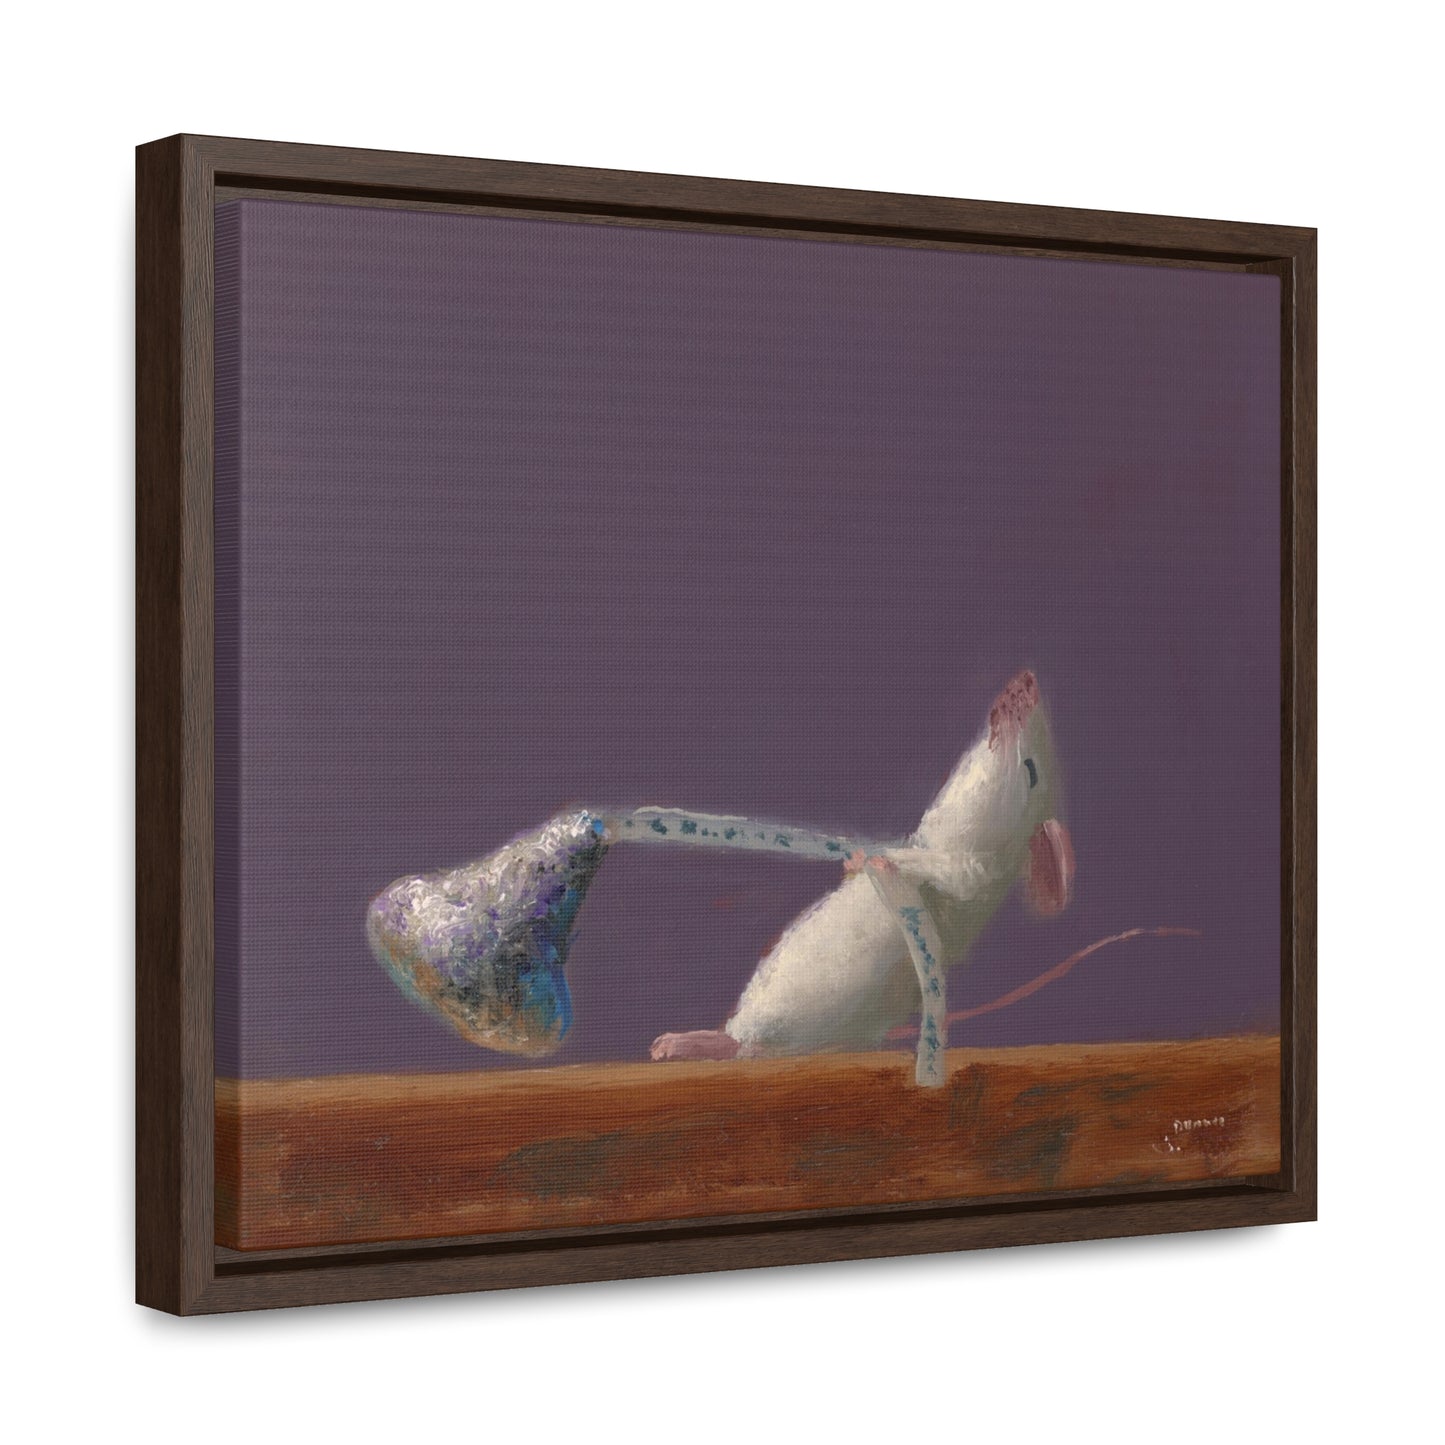 Stuart Dunkel: "Grabbing A Kiss" - Framed Canvas Reproduction